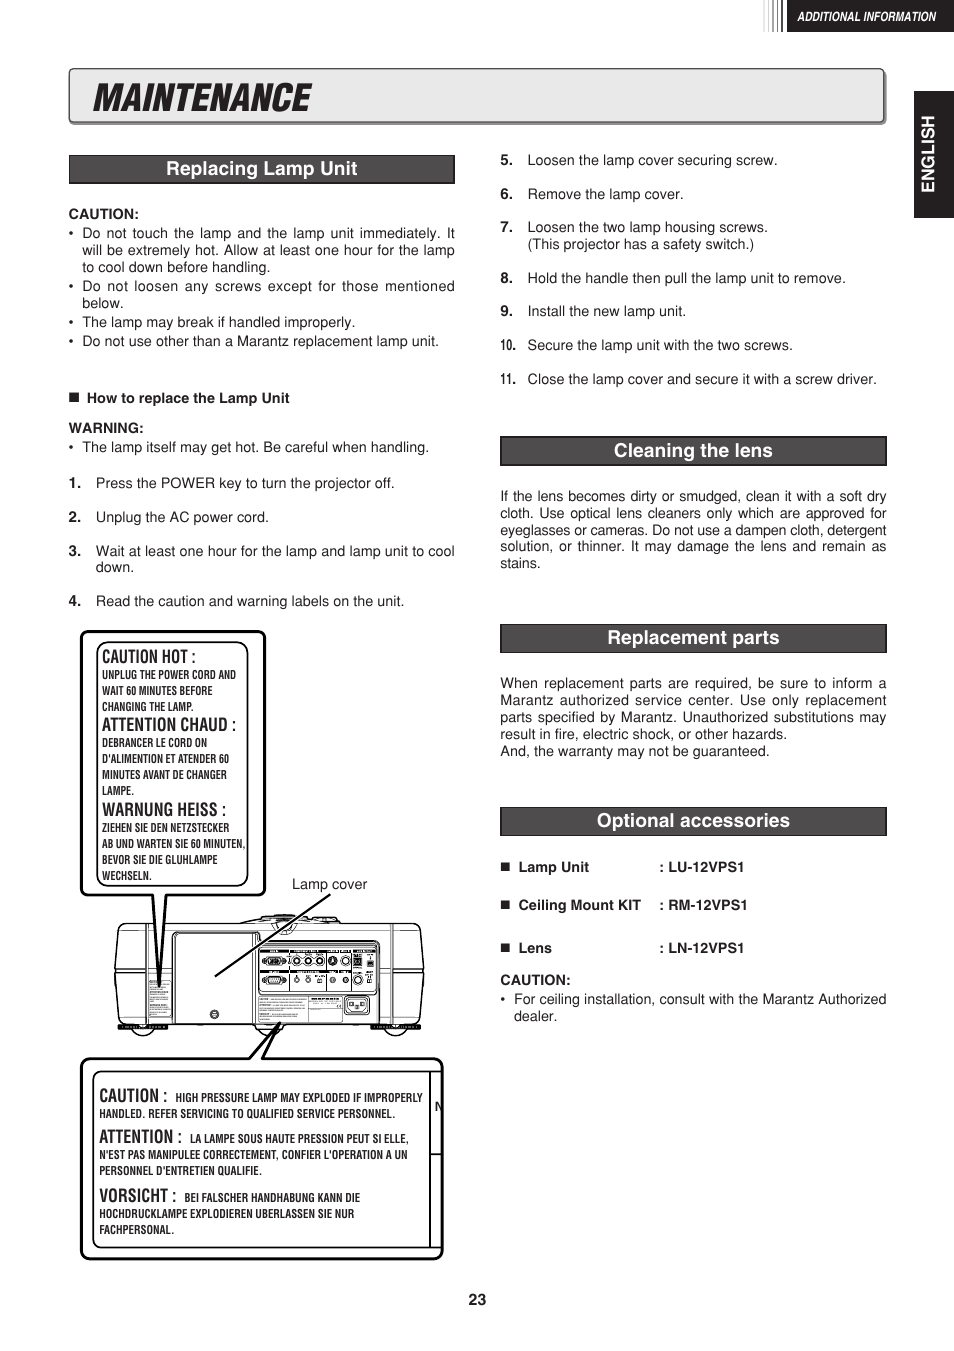 Maintenance | Marantz VP-12S1N User Manual | Page 25 / 31